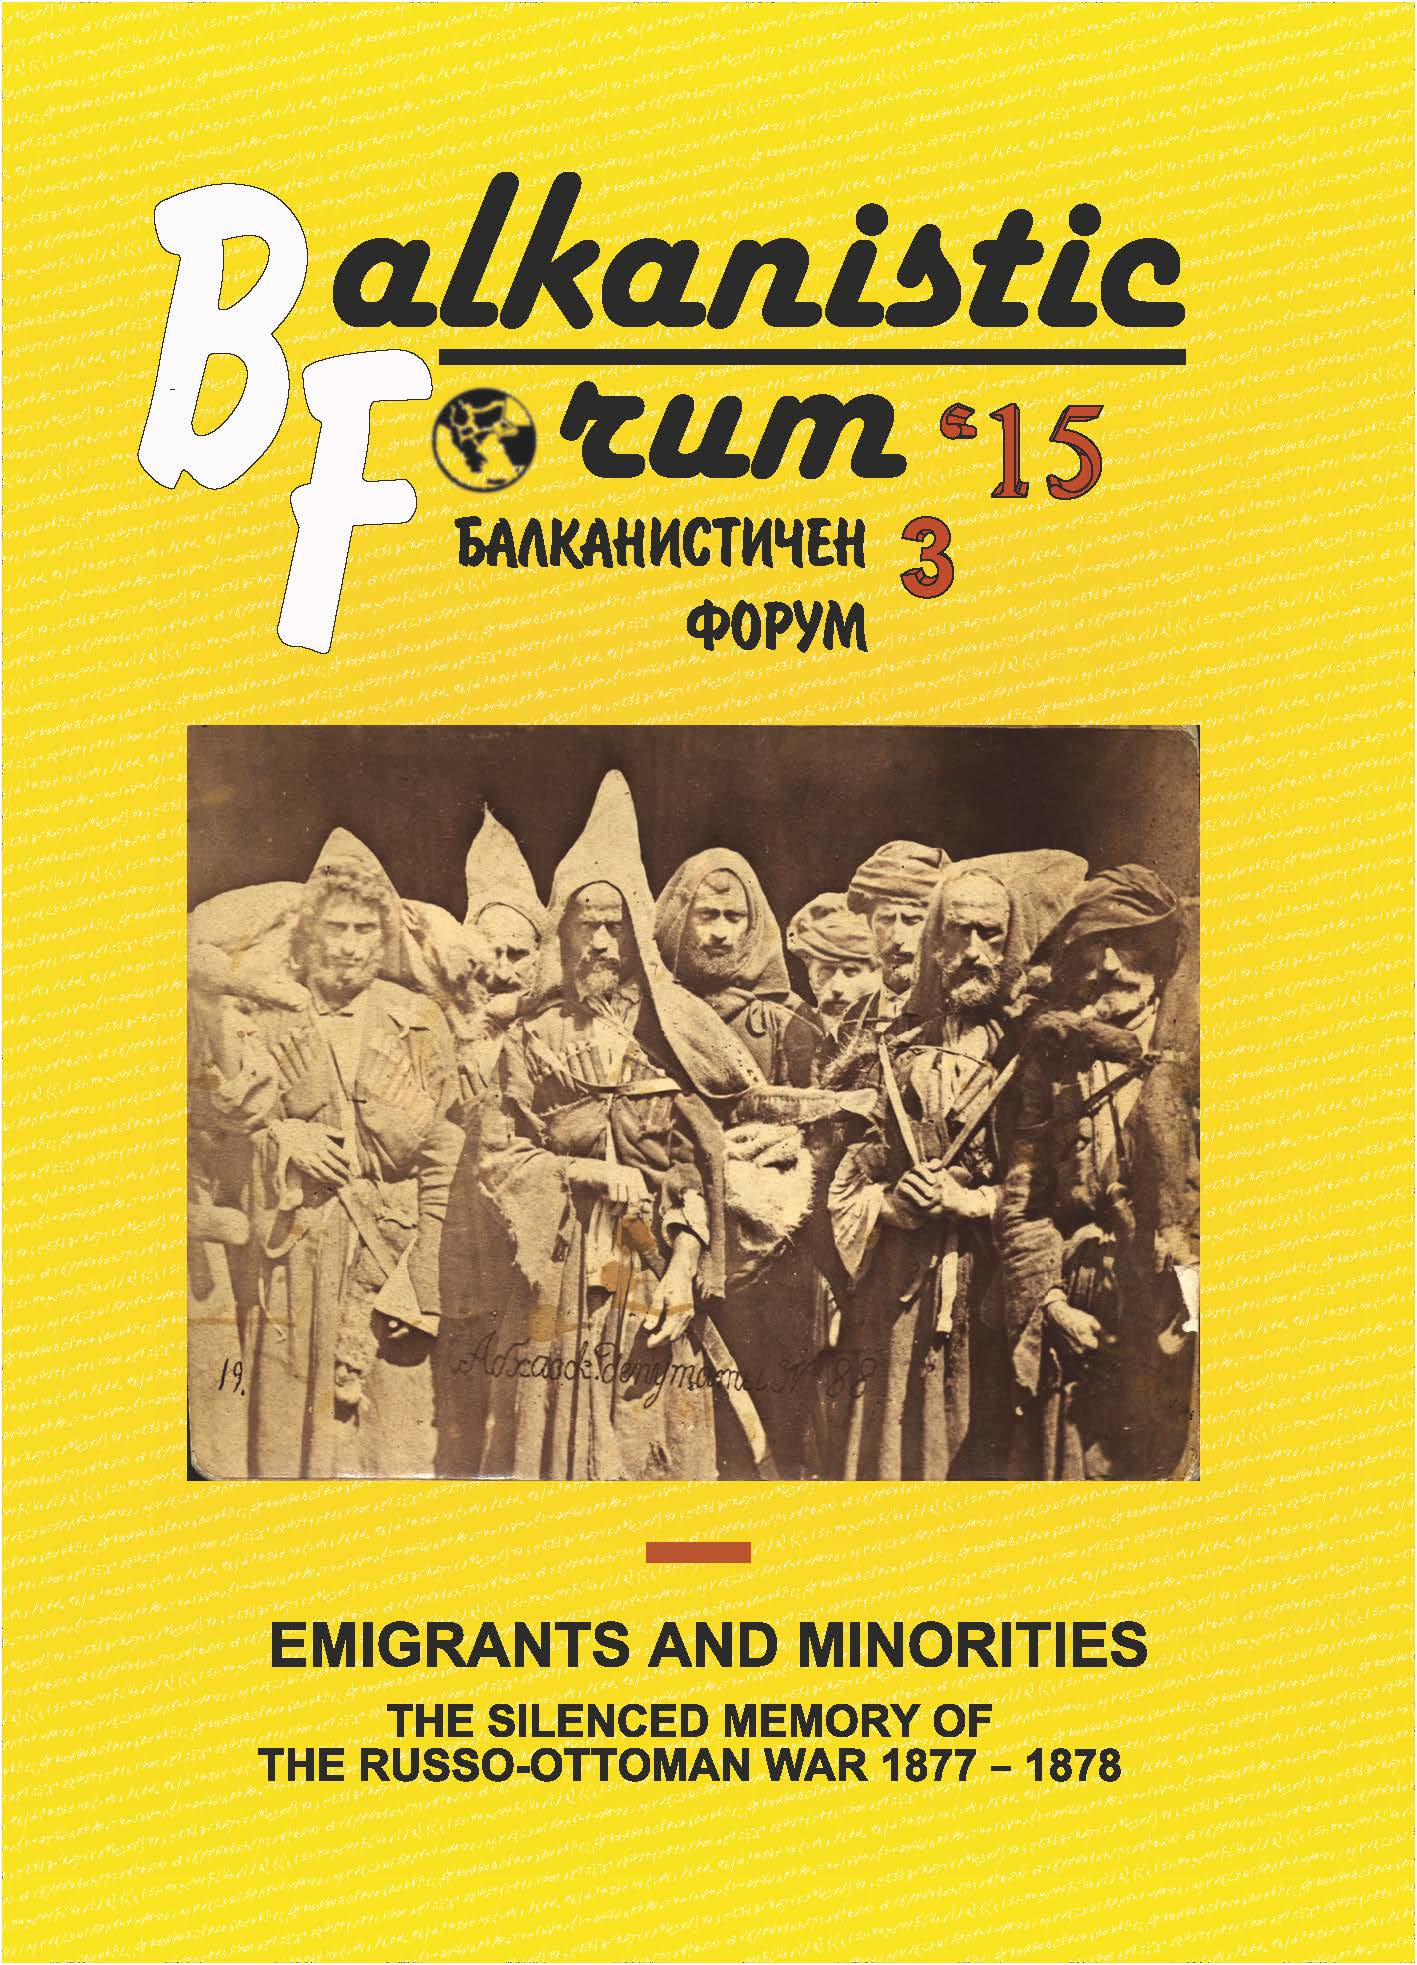 Balkanistic Forum Cover Image